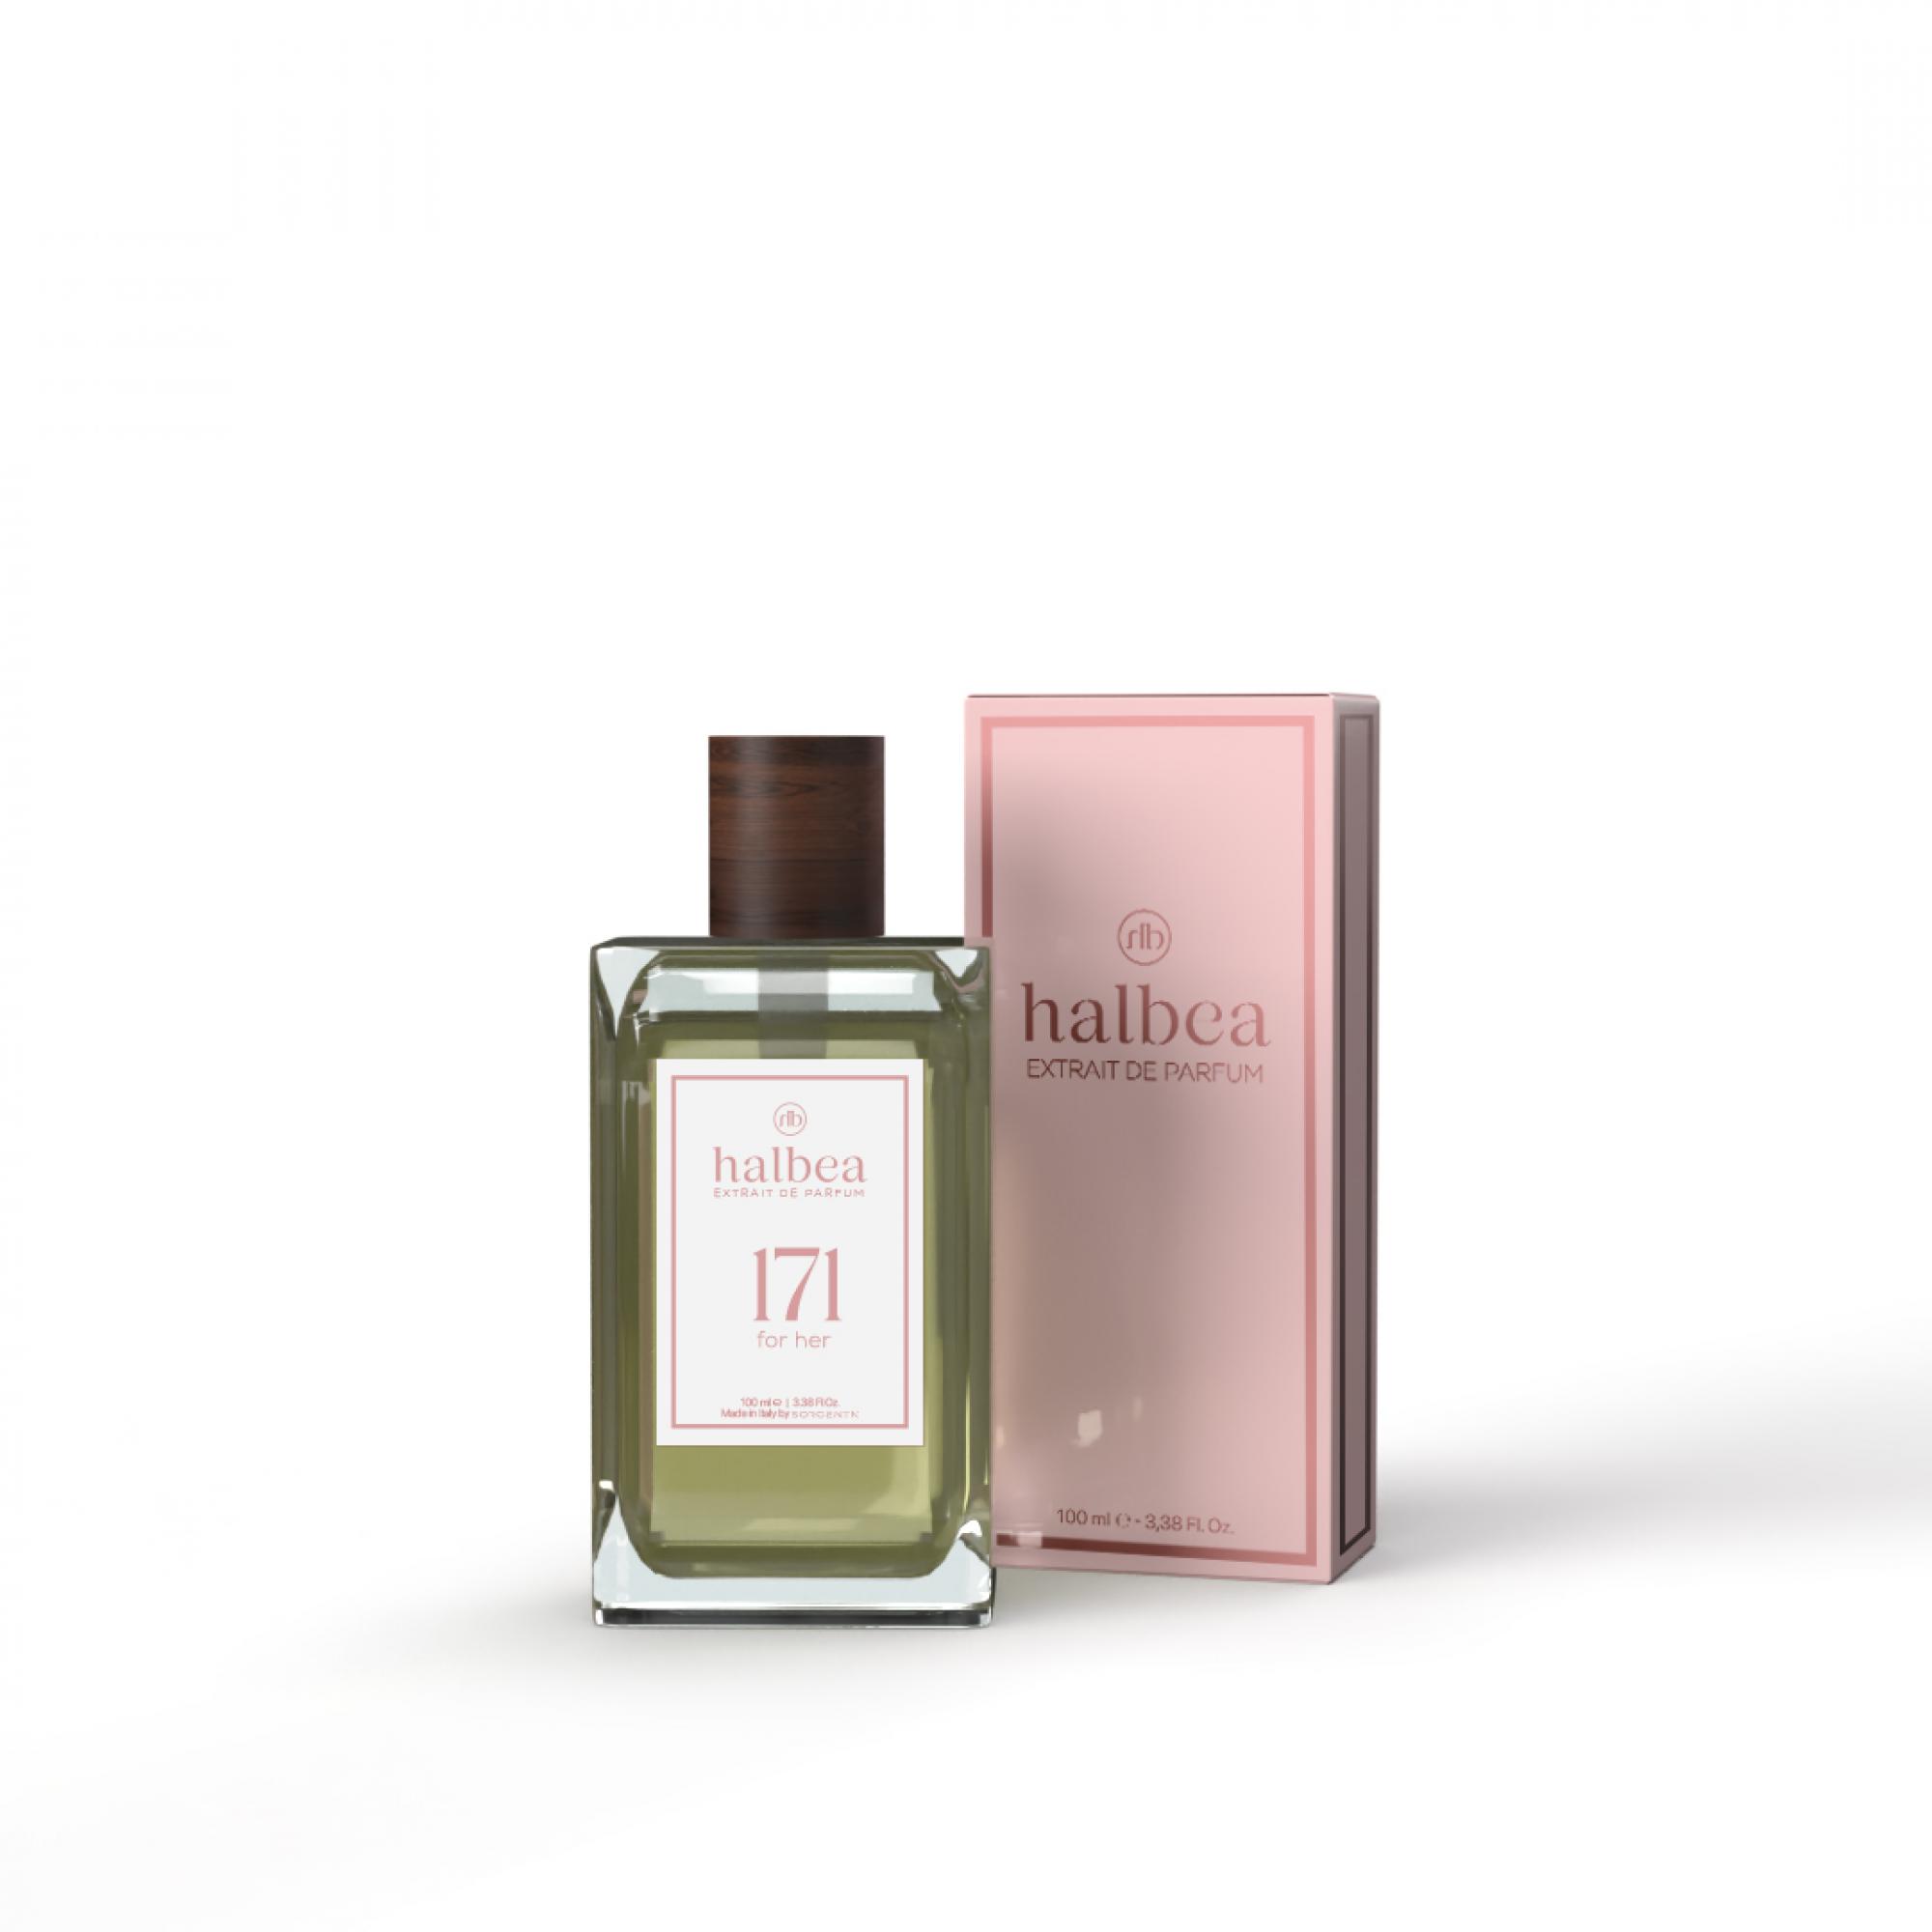 Halbea Parfum Nr. 171 insp. by Burberry My Burberry 100ml